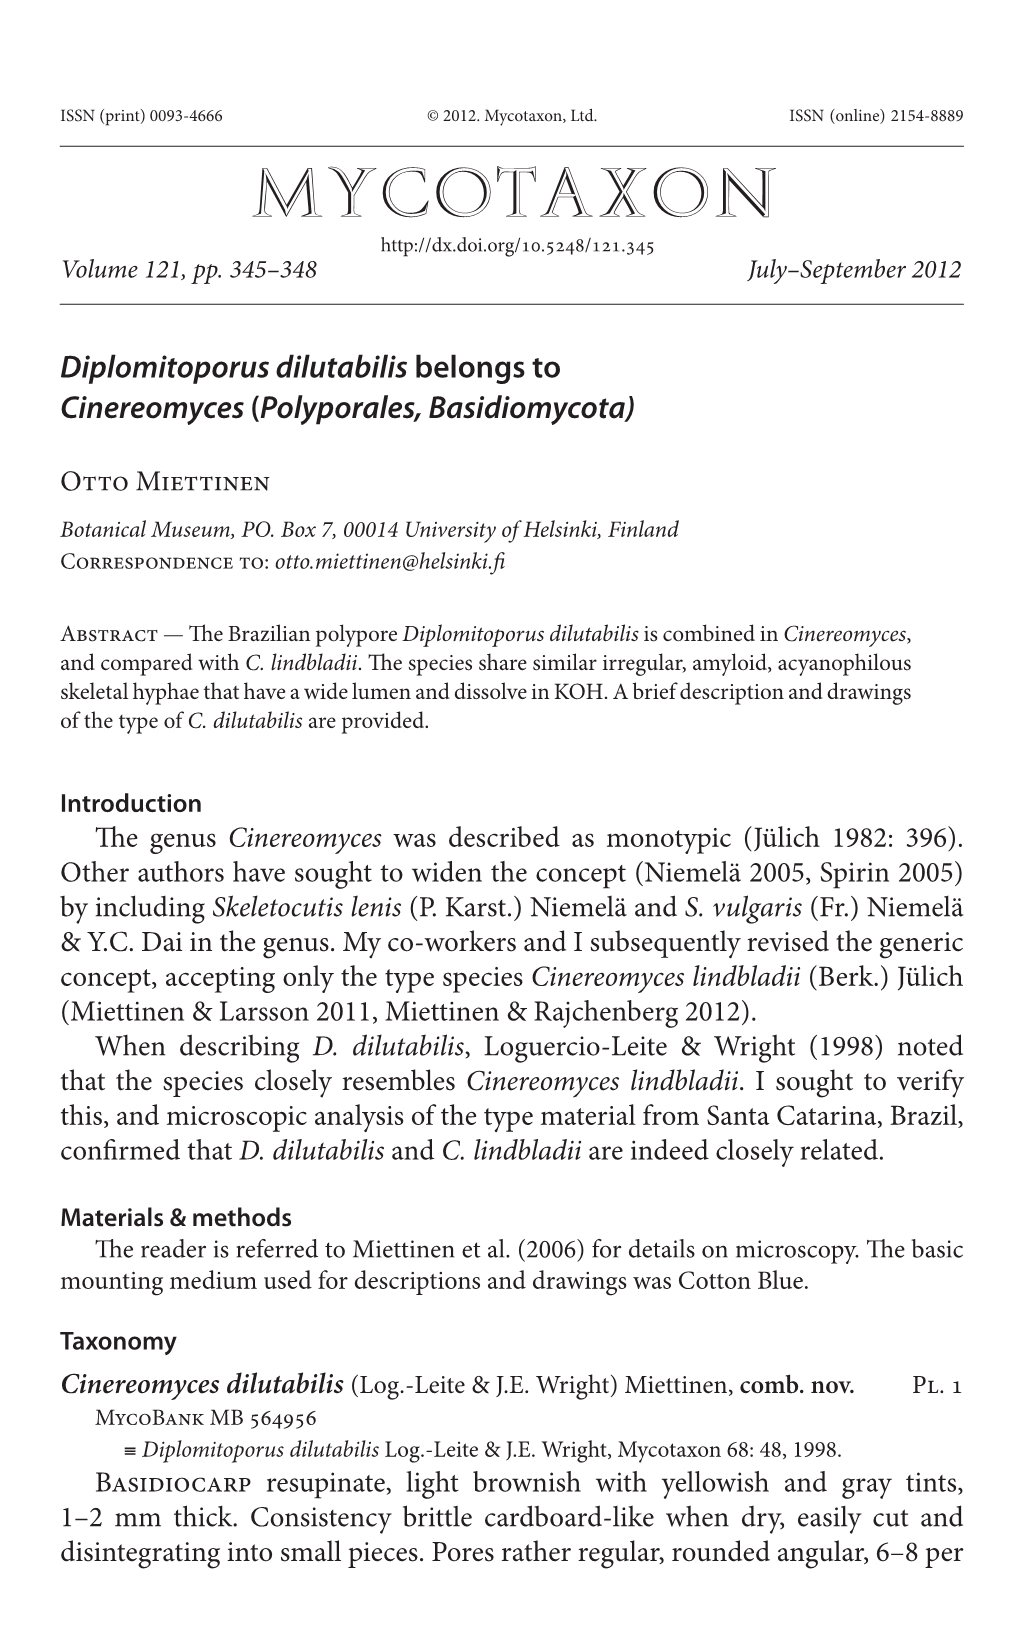 &lt;I&gt;Diplomitoporus Dilutabilis&lt;/I&gt; Belongs to &lt;I&gt;Cinereomyces&lt;/I&gt; (&lt;I